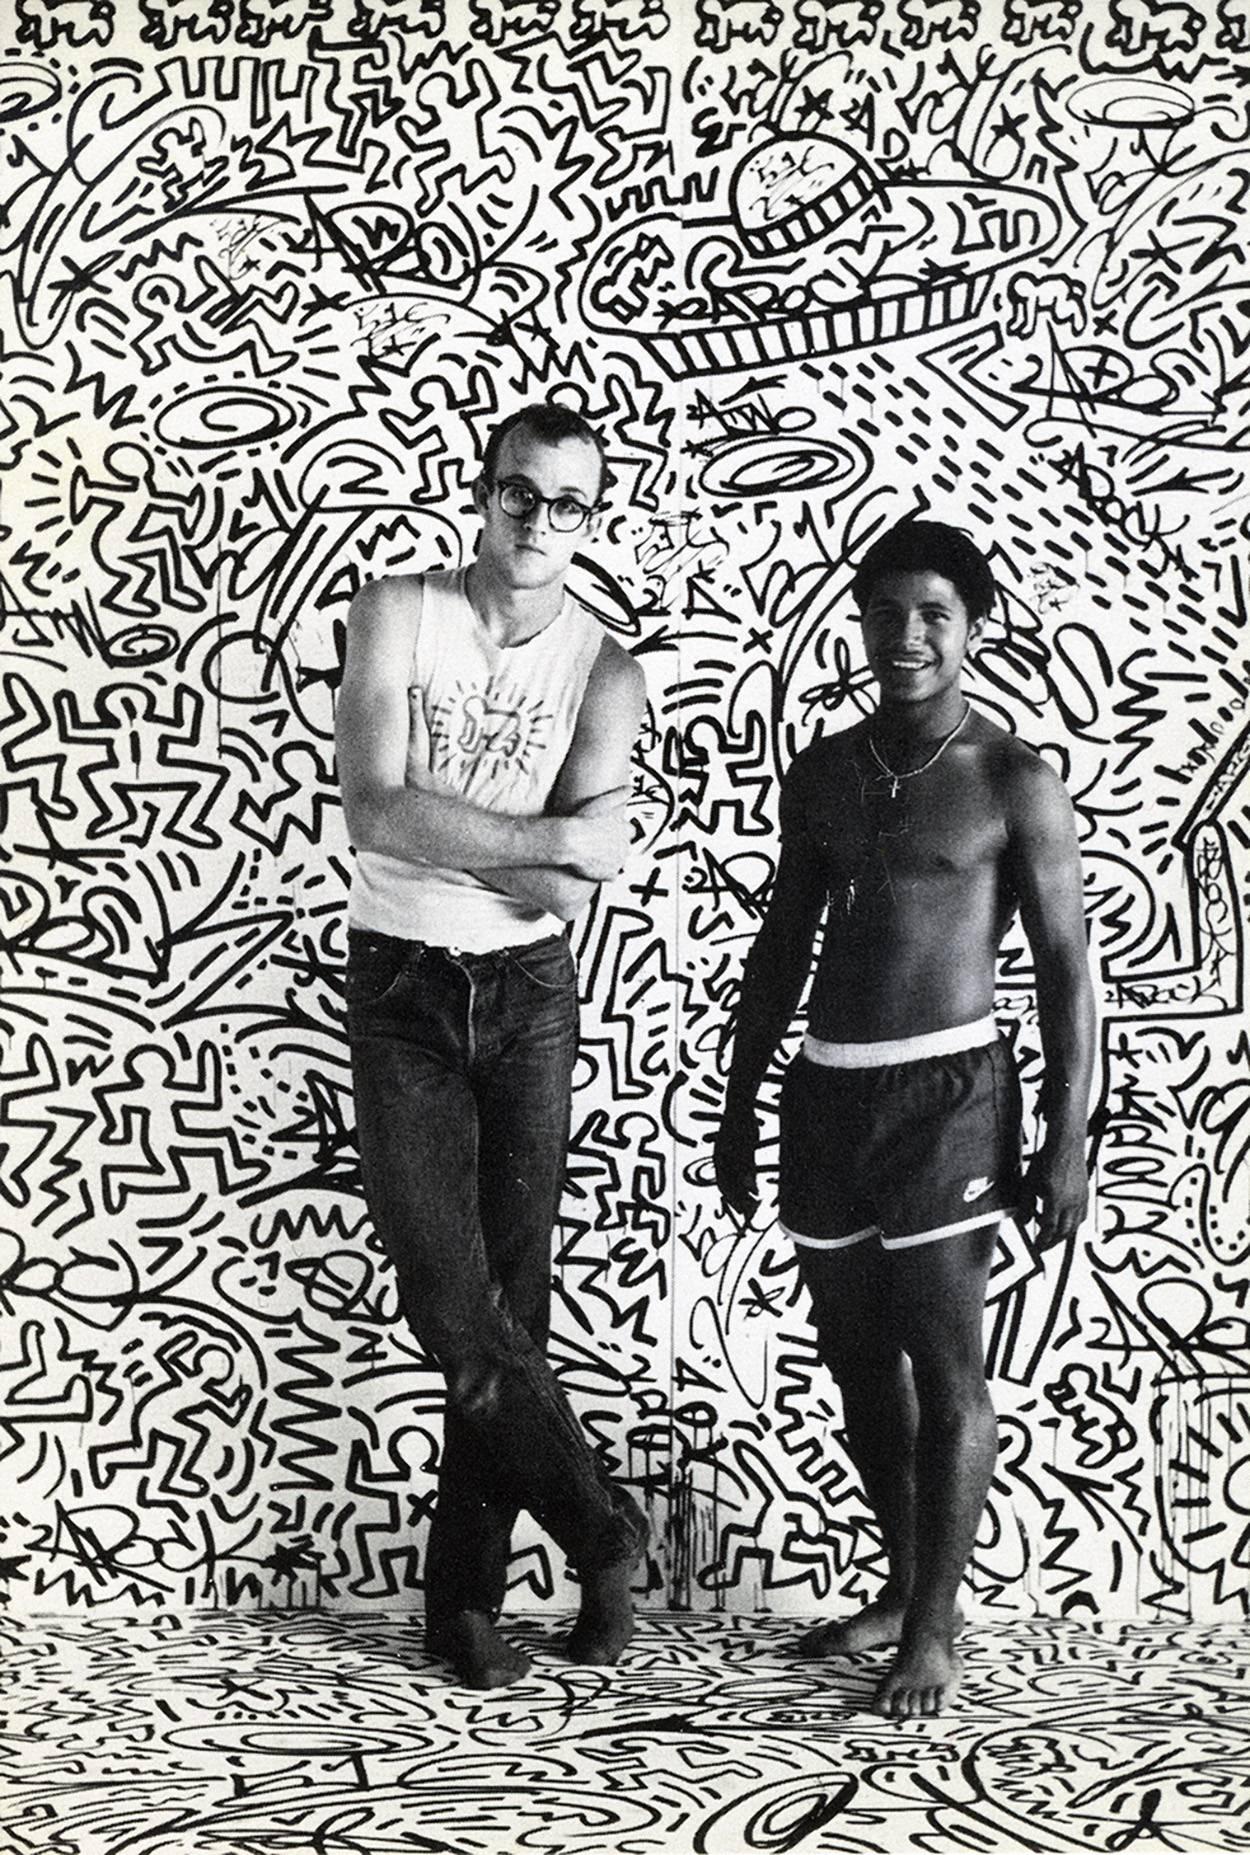 Keith Haring with LA2 (Keith Haring Tony Shafrazi announcement 1982)  - Photograph by Tseng Kwong Chi